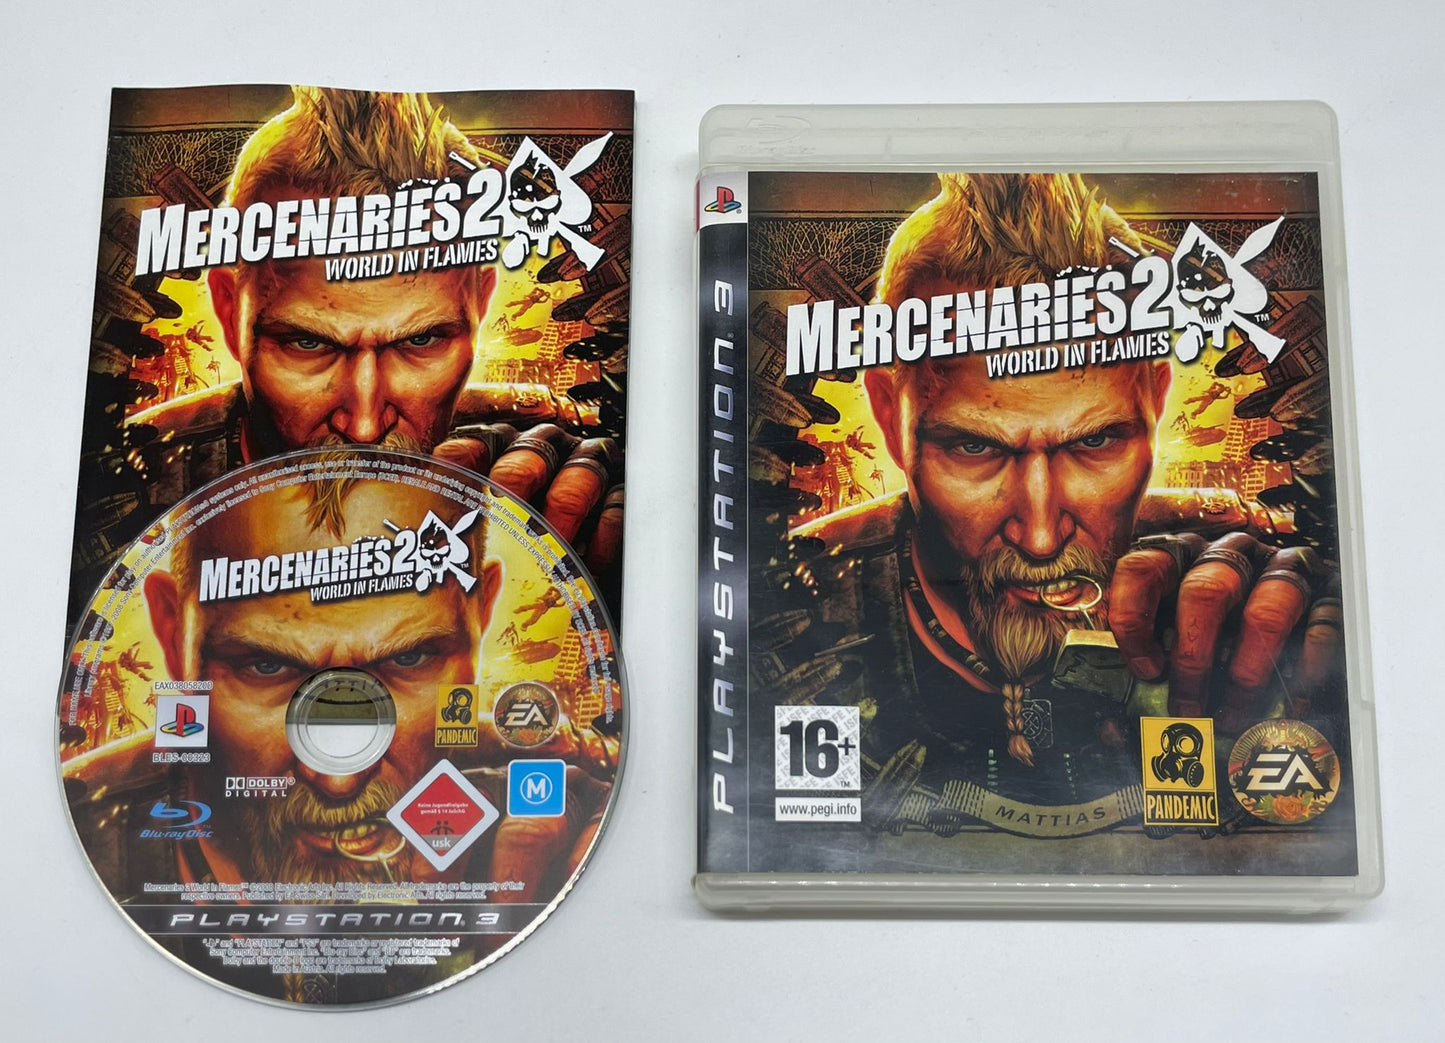 Mercenaries 2: World in Flames OVP